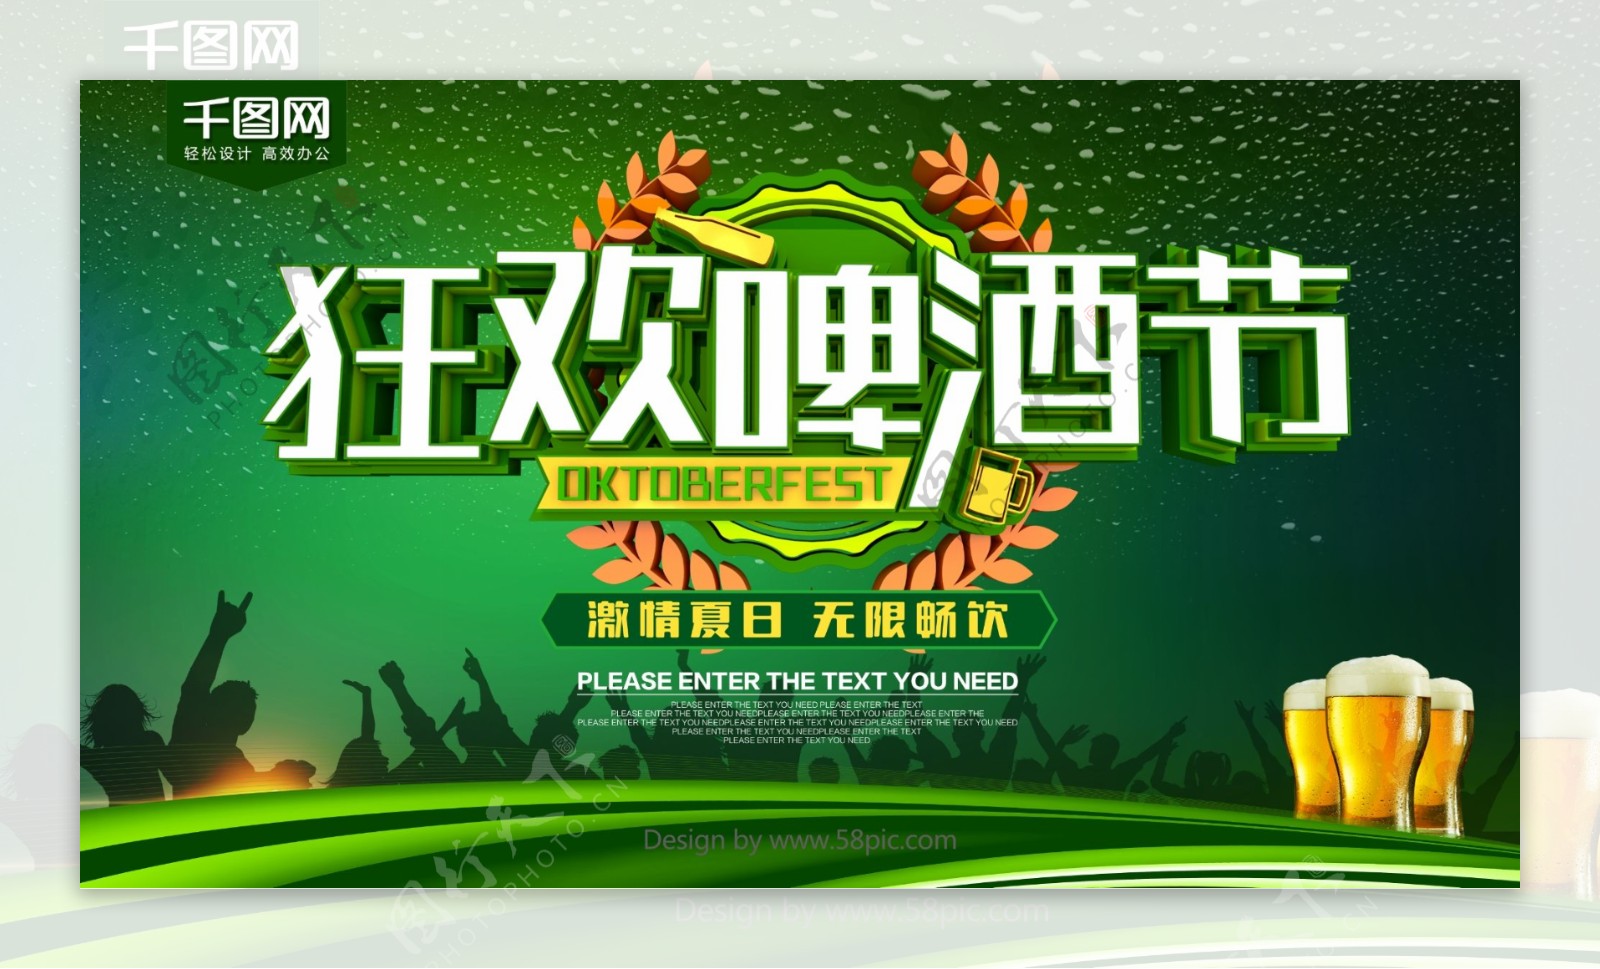 C4D绿色狂欢啤酒节海报